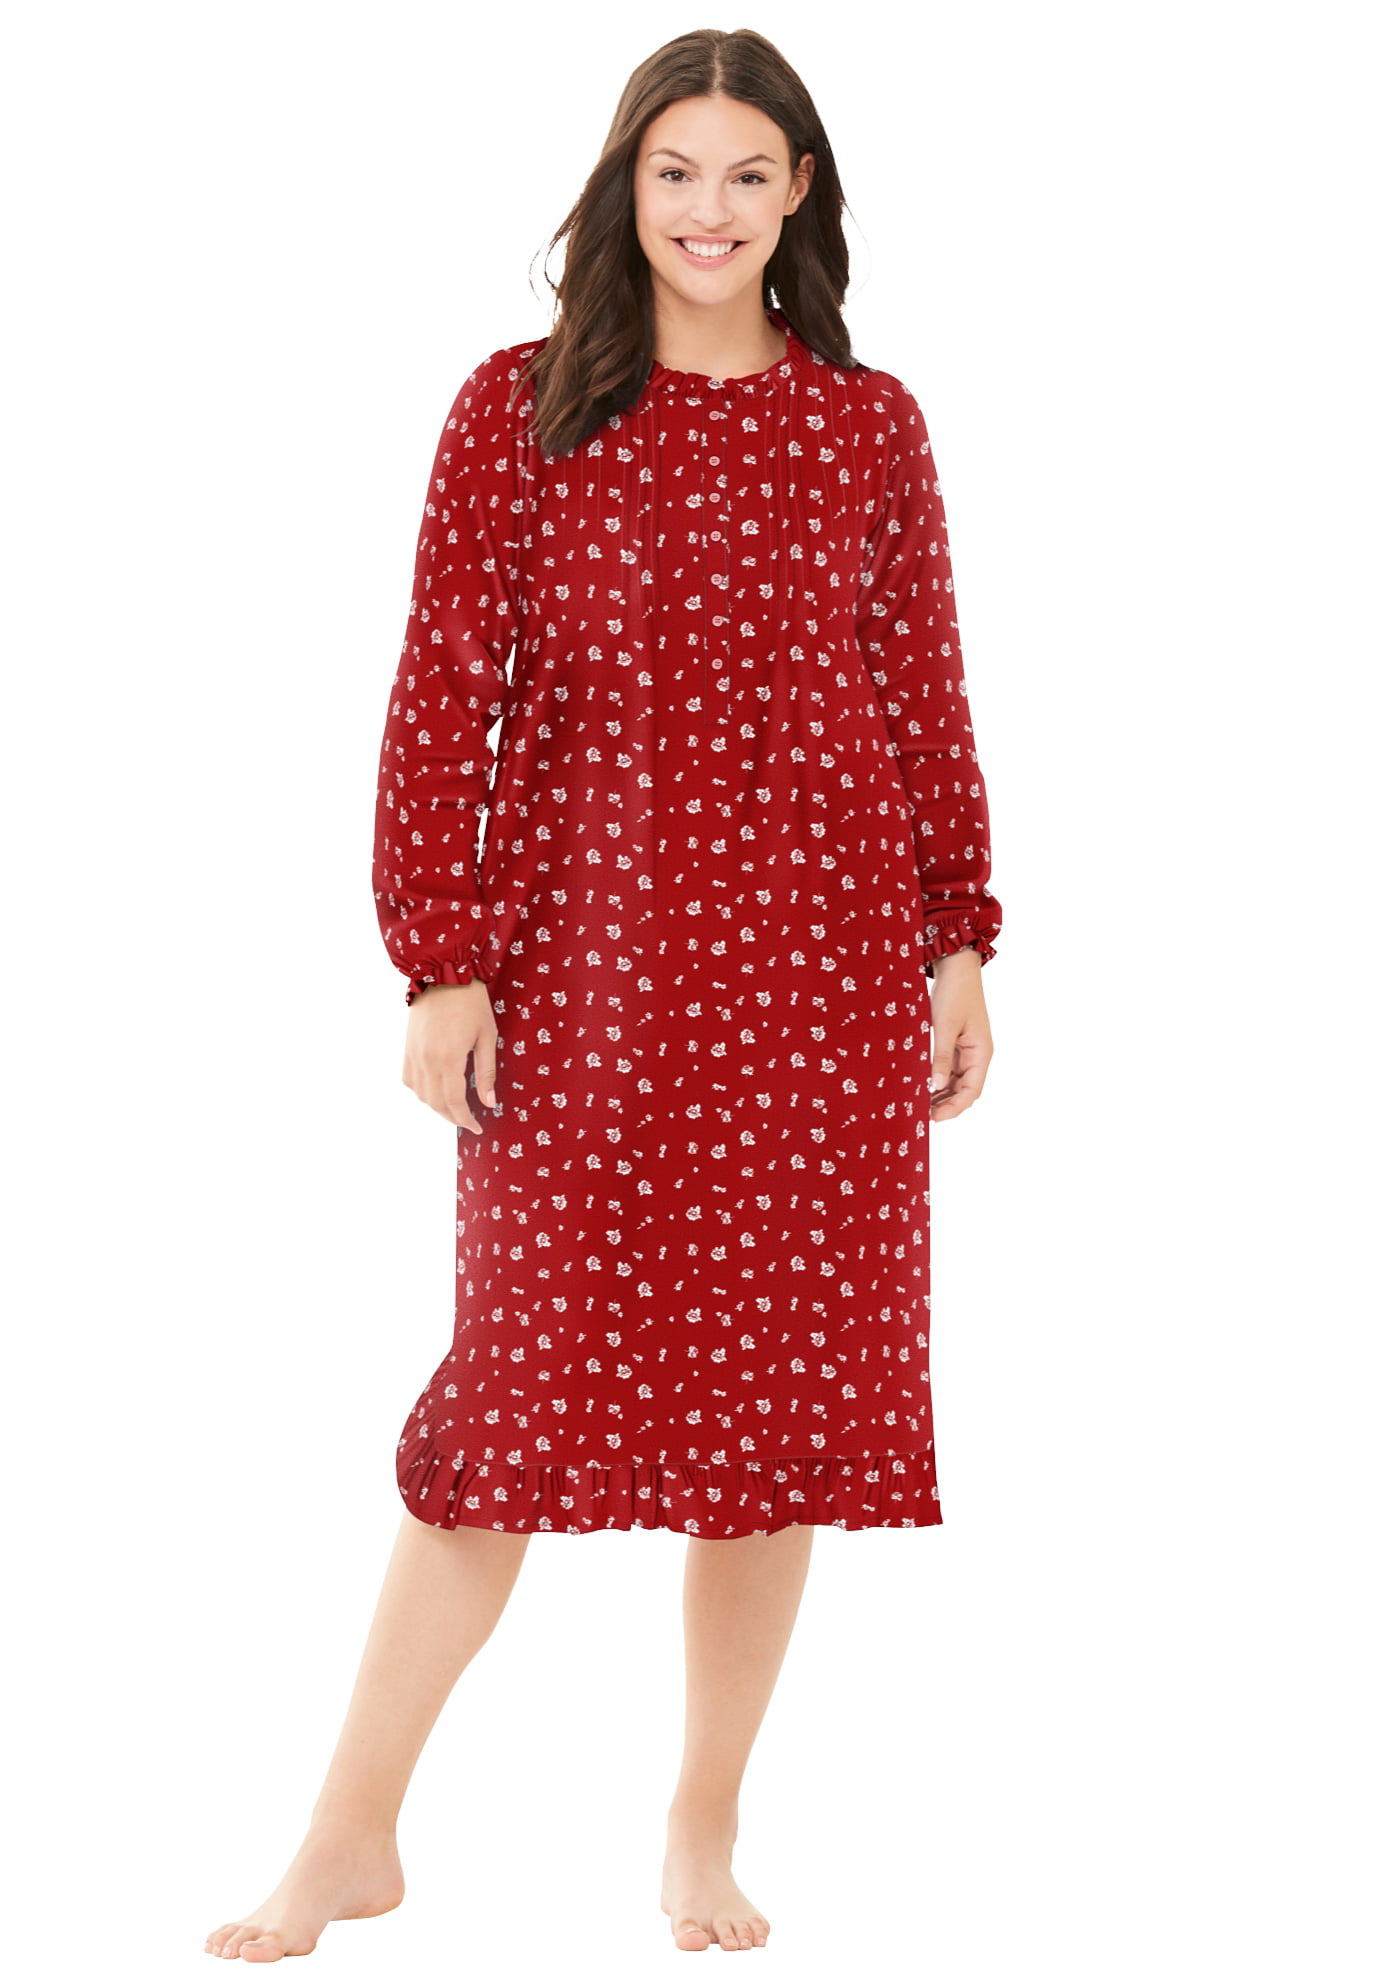 Only Necessities Women's Plus Size Cotton Flannel Print Short Gown ...